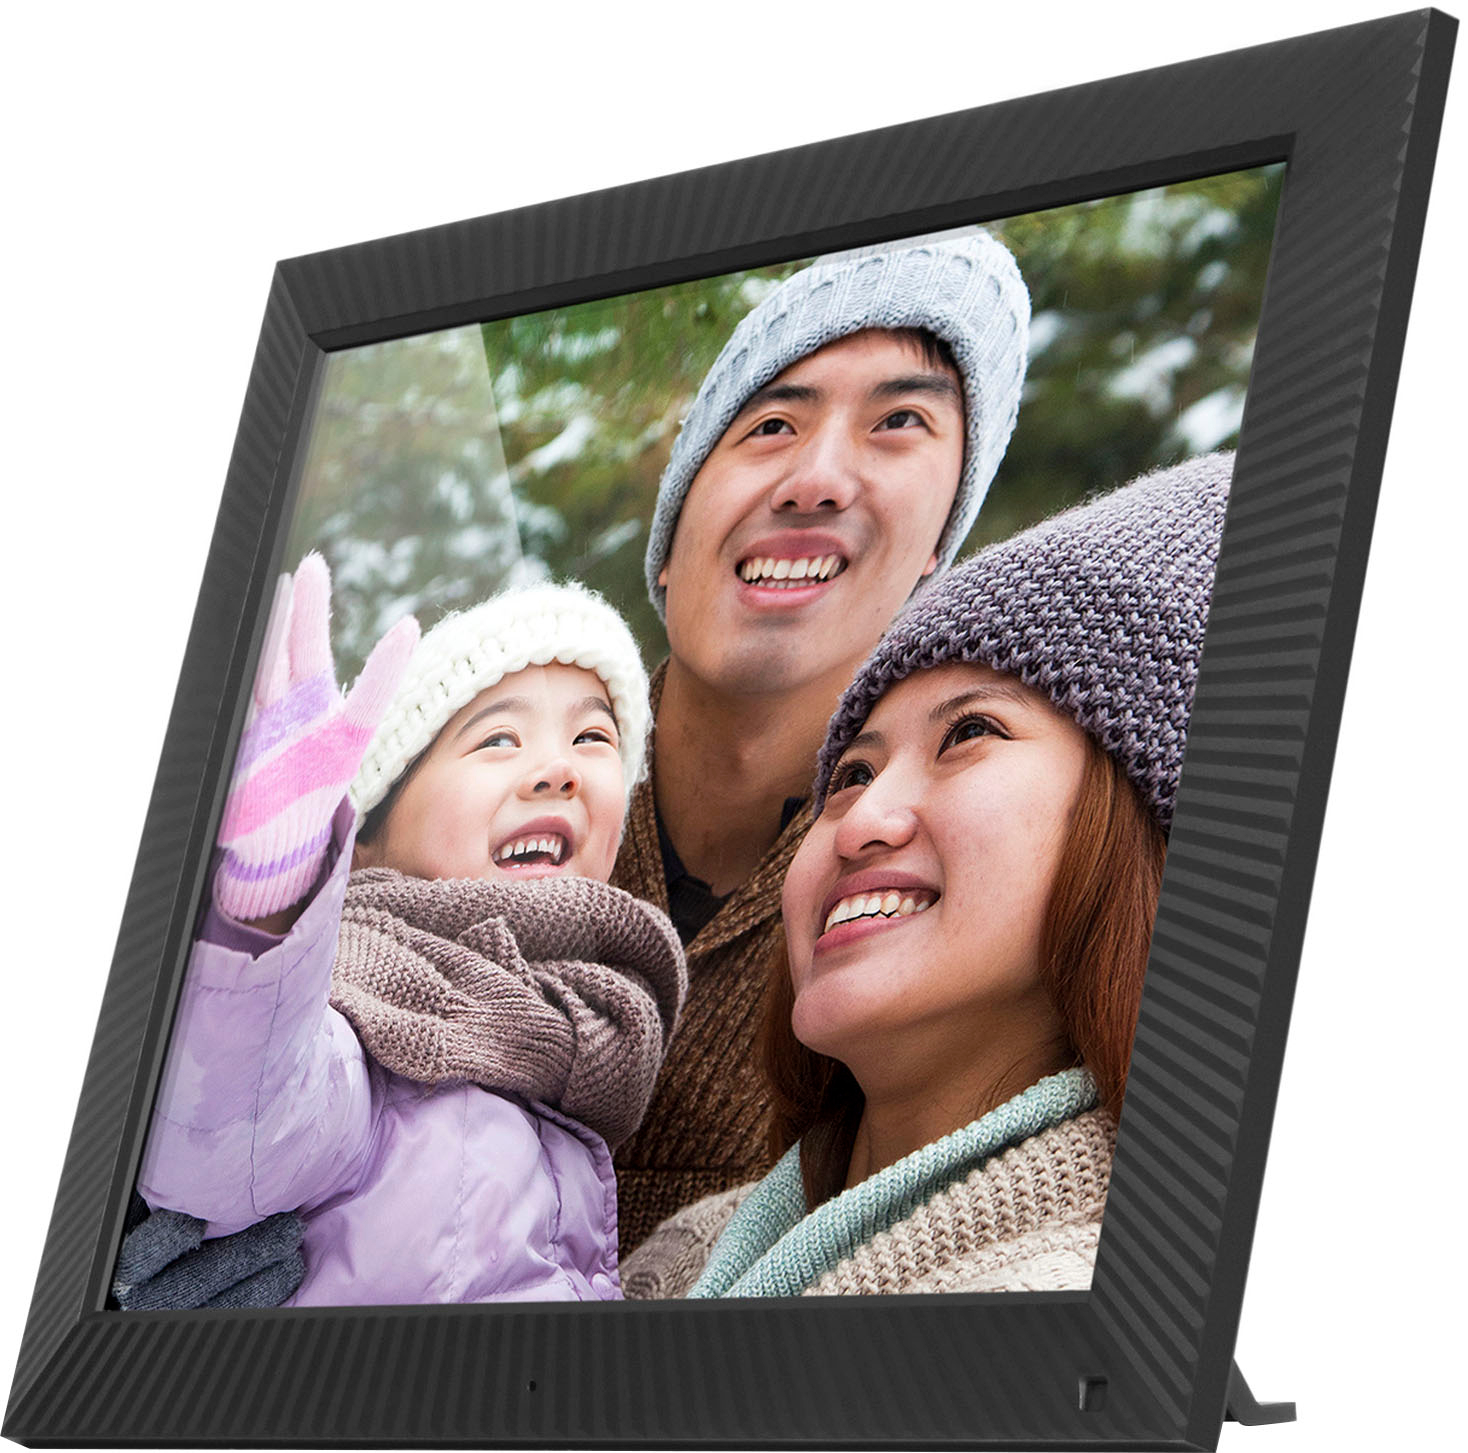 Angle View: Aluratek - 17" Touchscreen LCD Wi-Fi Digital Photo Frame - Black